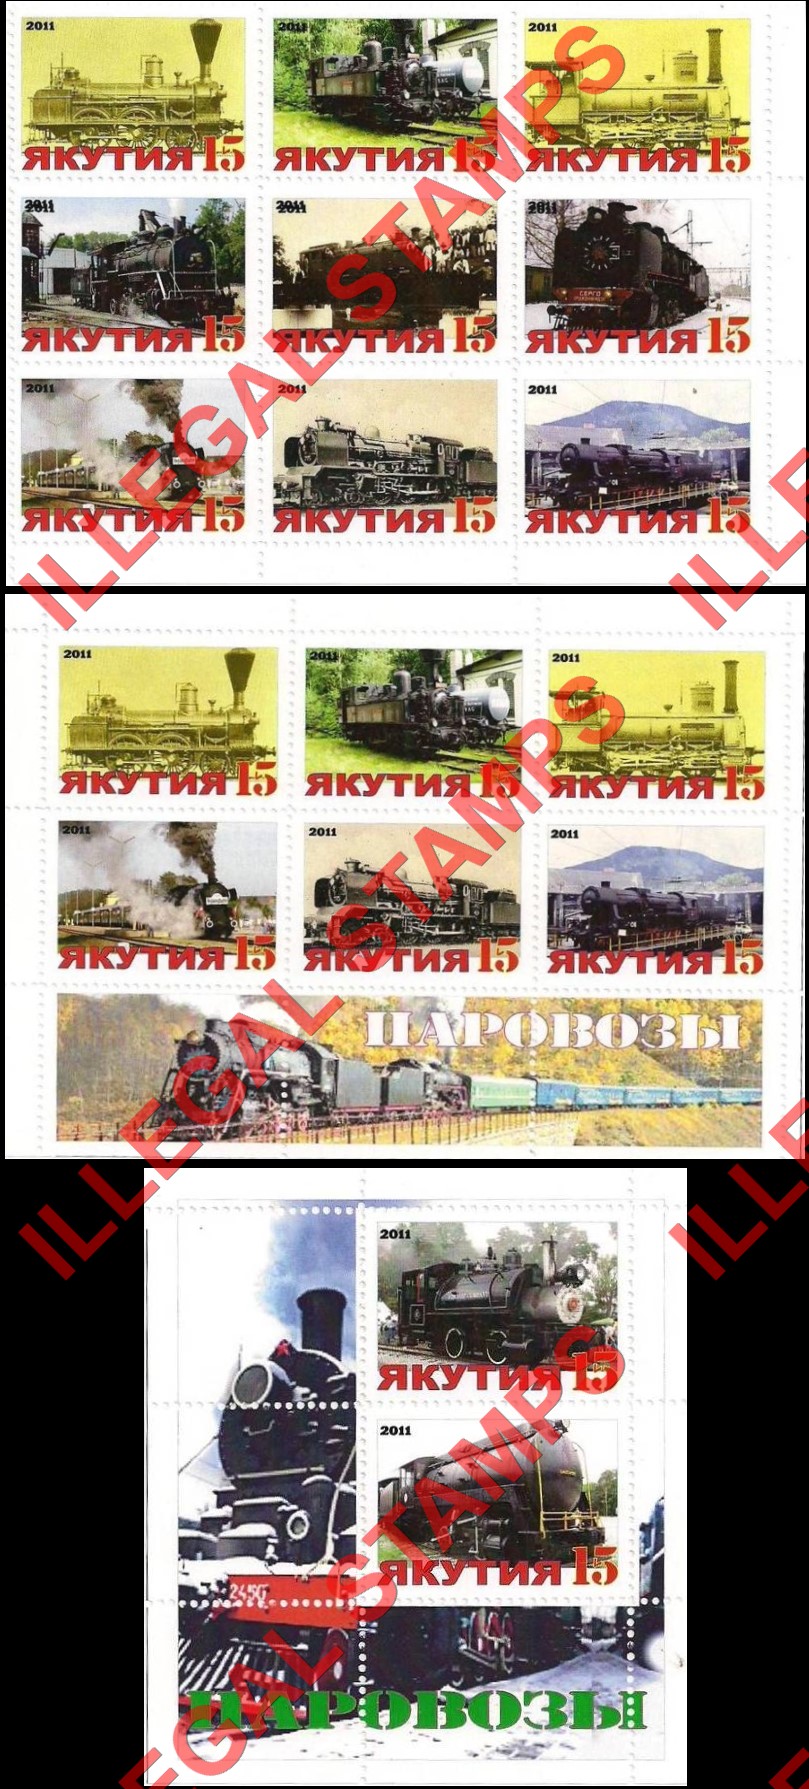 Republic of Sakha Yakutia 2011 Counterfeit Illegal Stamps (Part 1)